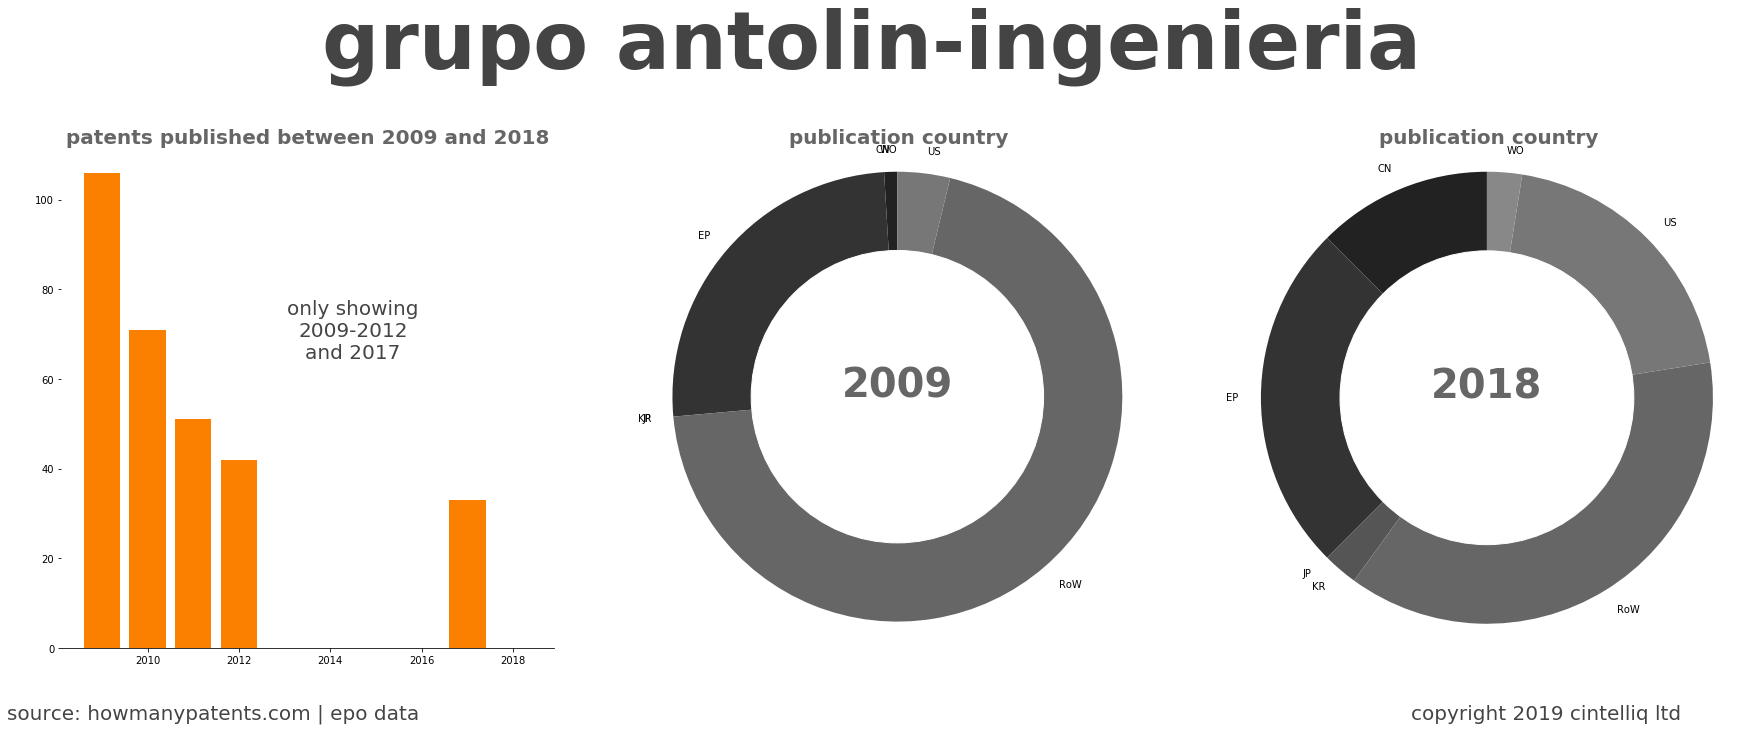 summary of patents for Grupo Antolin-Ingenieria